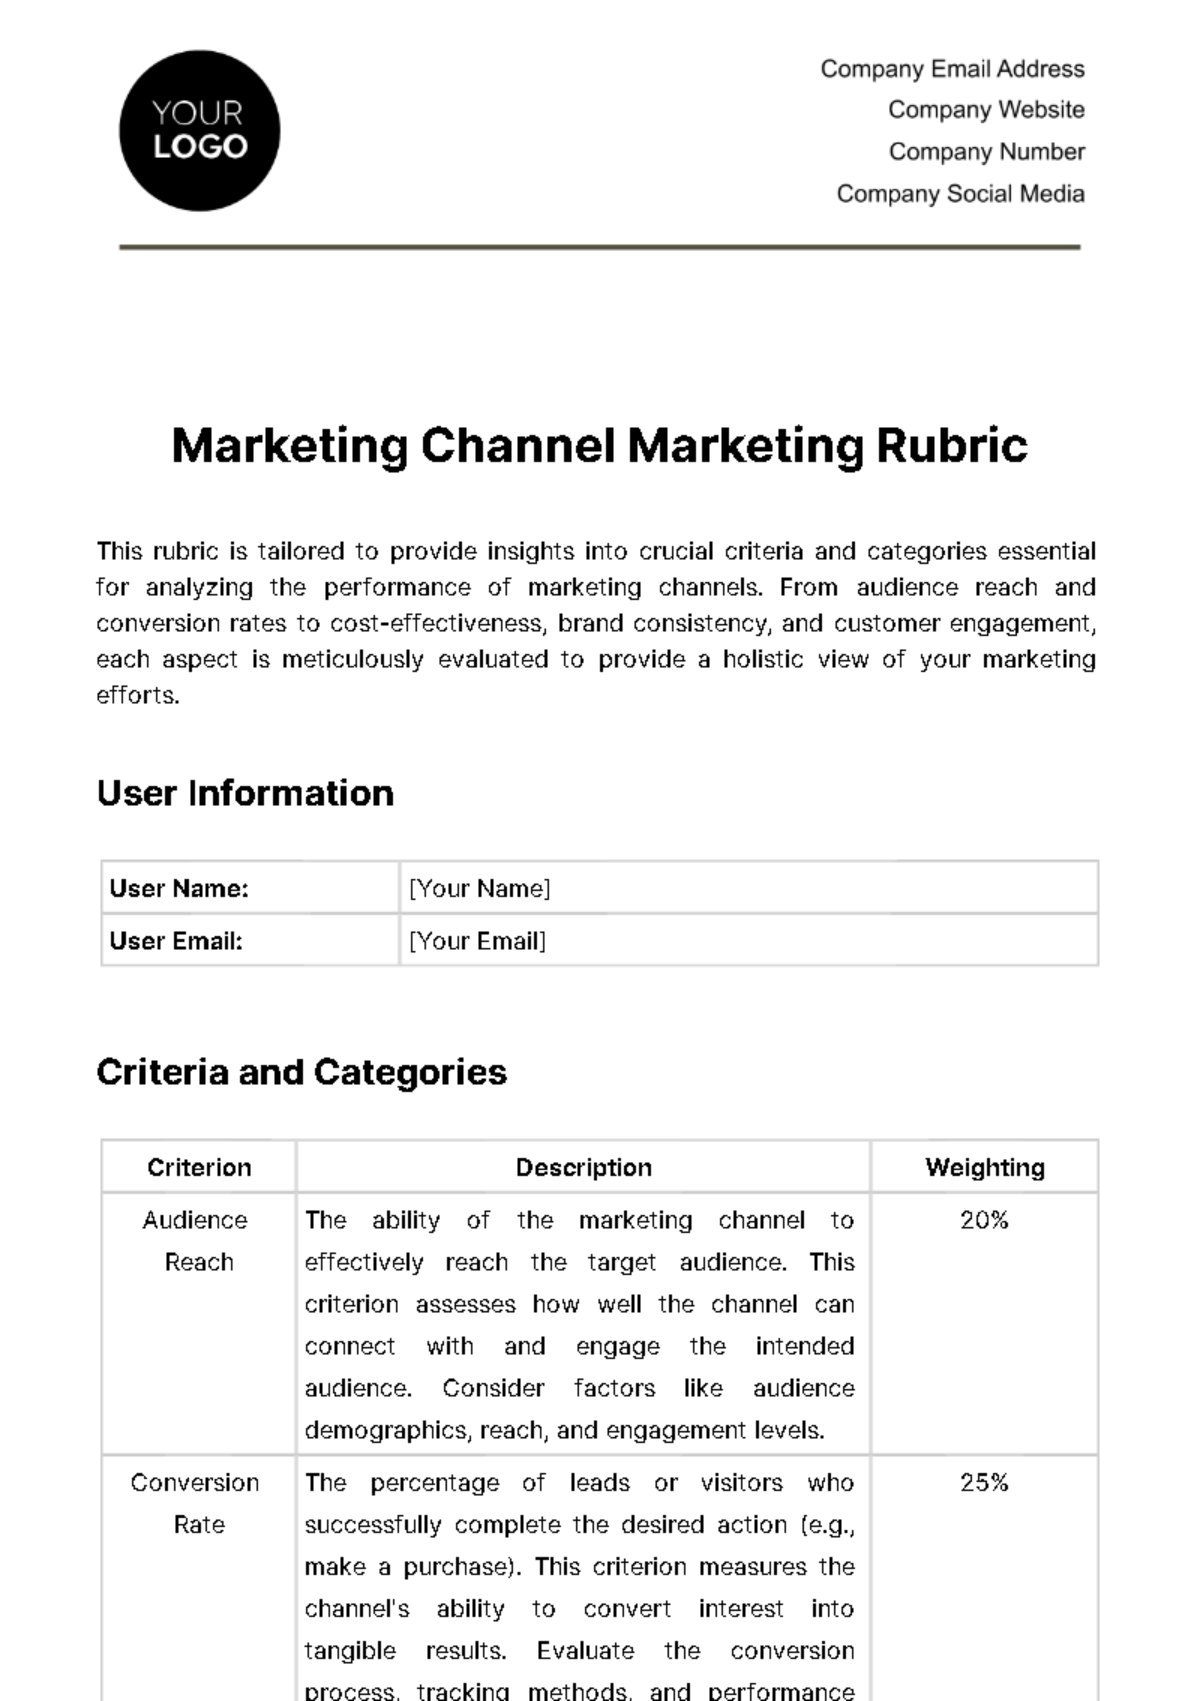 Marketing Channel Marketing Rubric Template